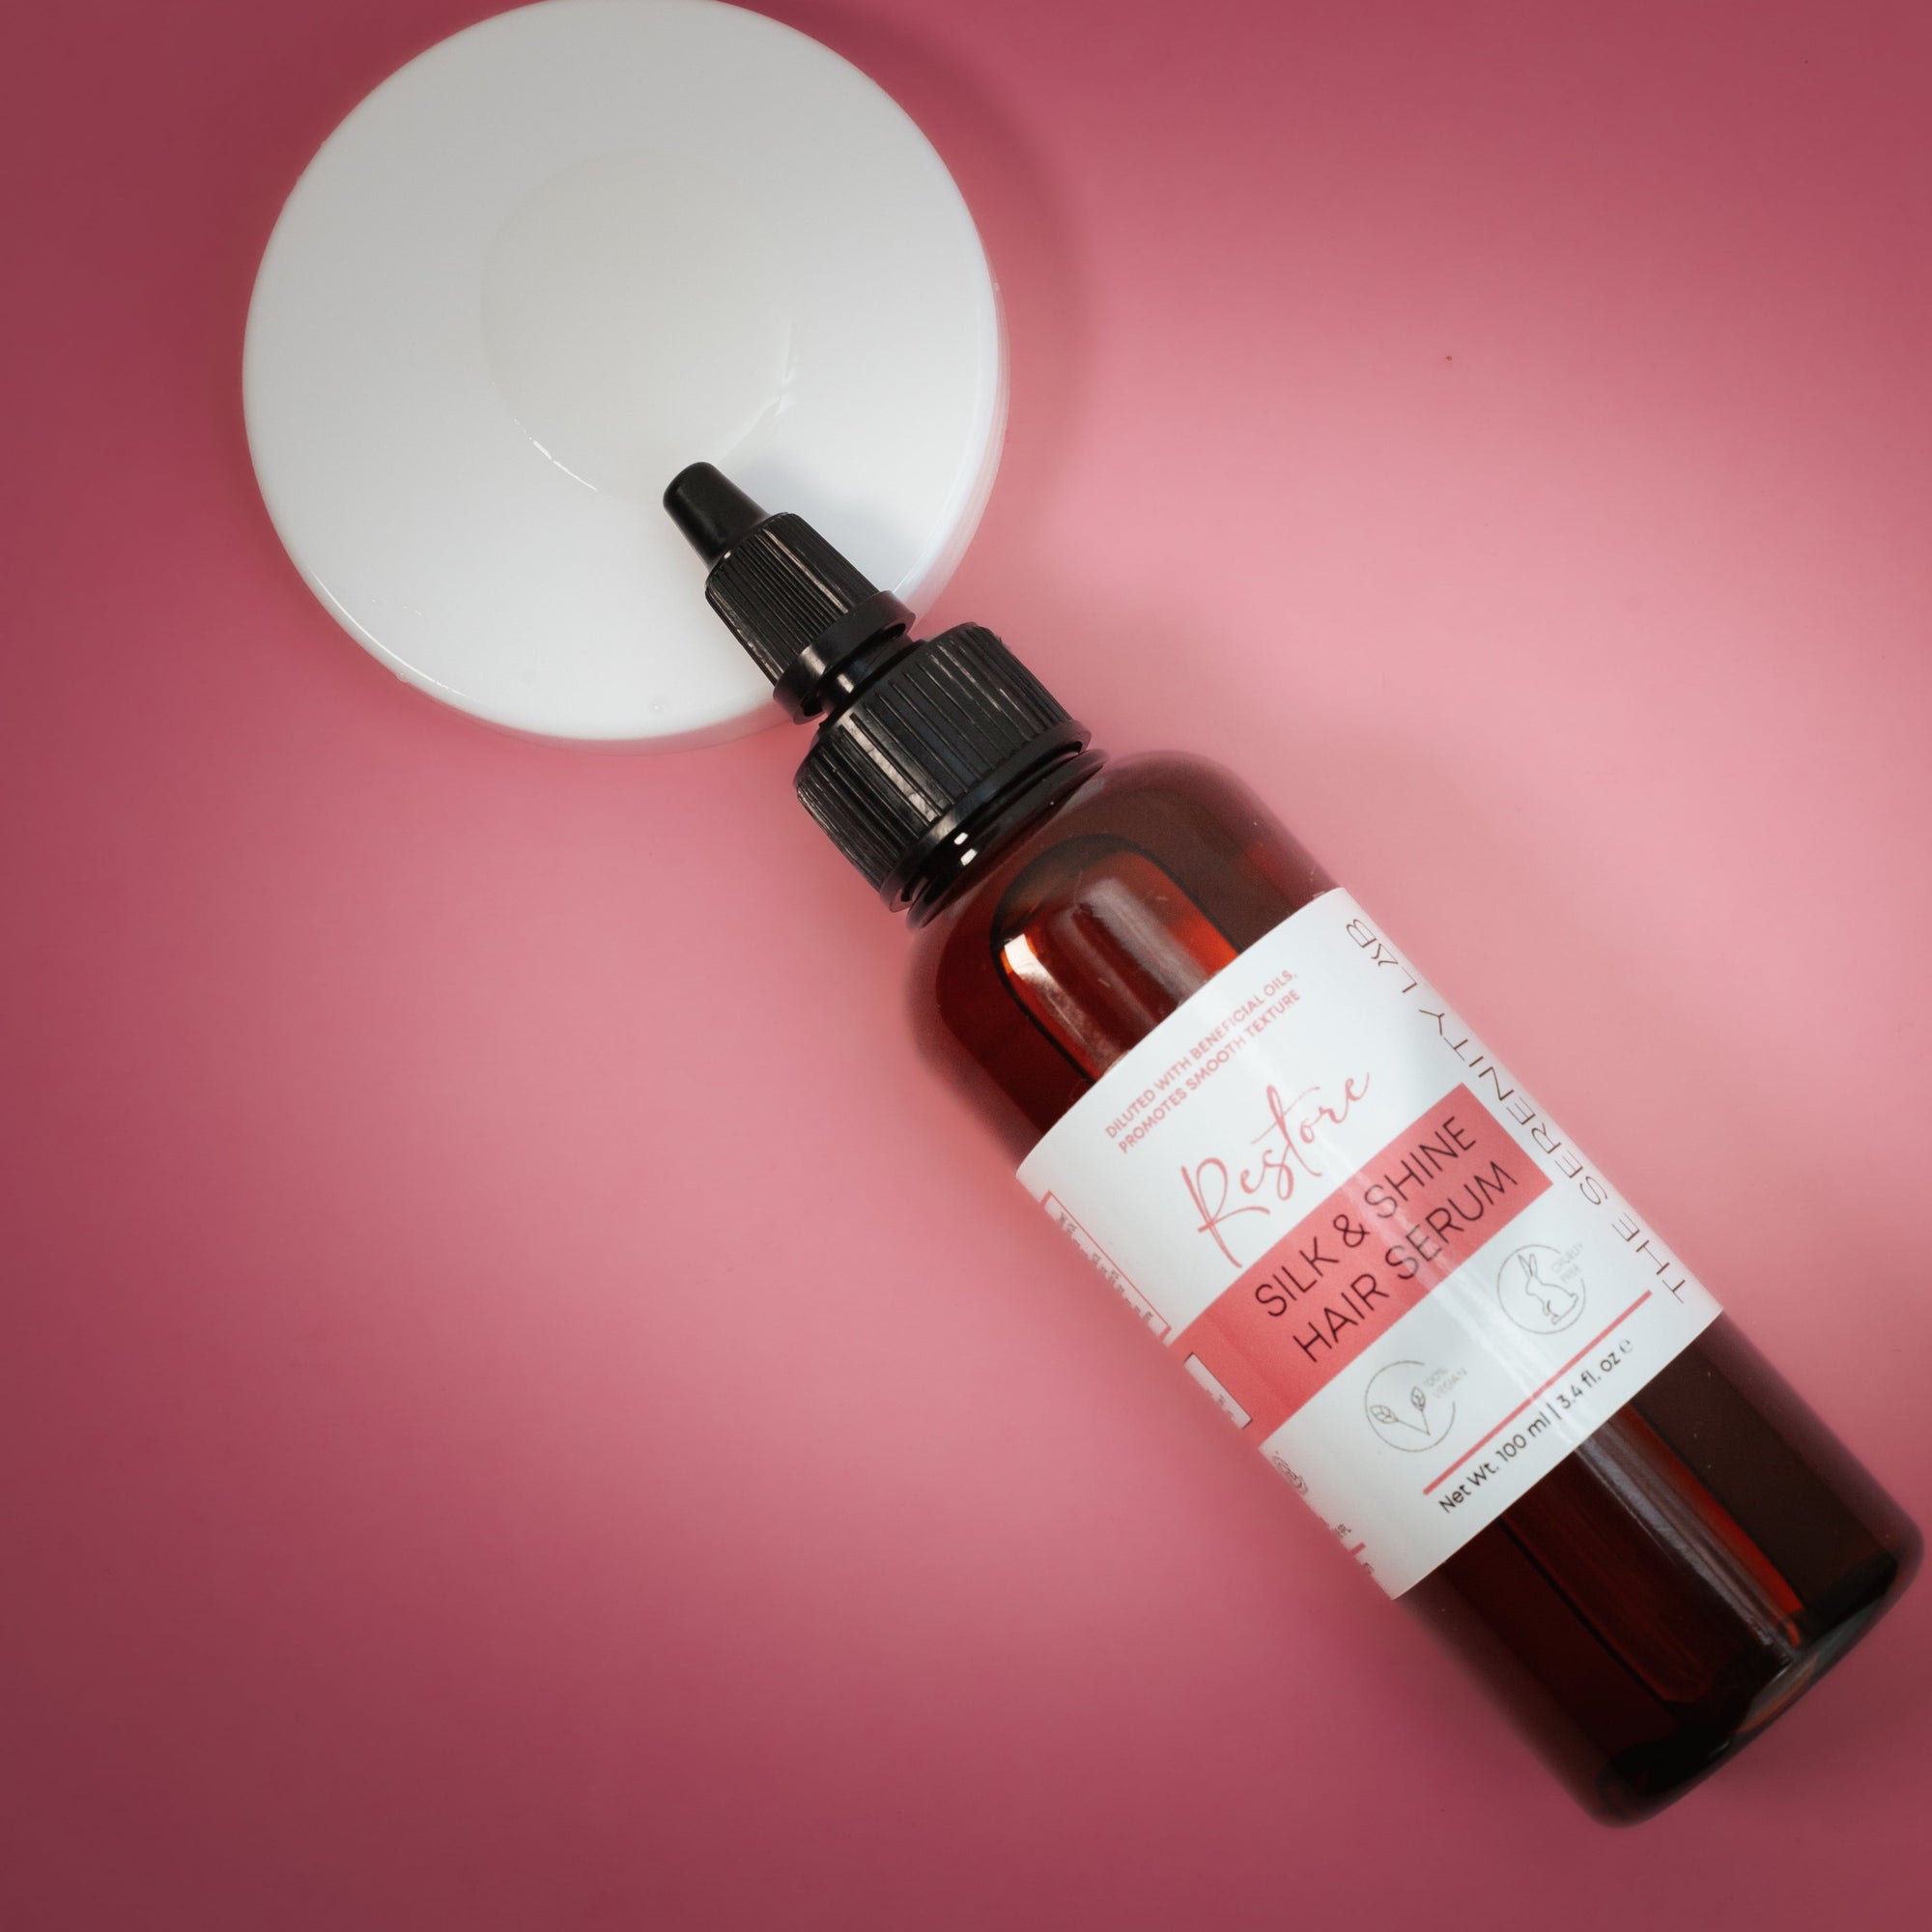 The Serenity Lab's Silk and Shine Hair Serum: Will Argan Oil Help Dry Scalp?